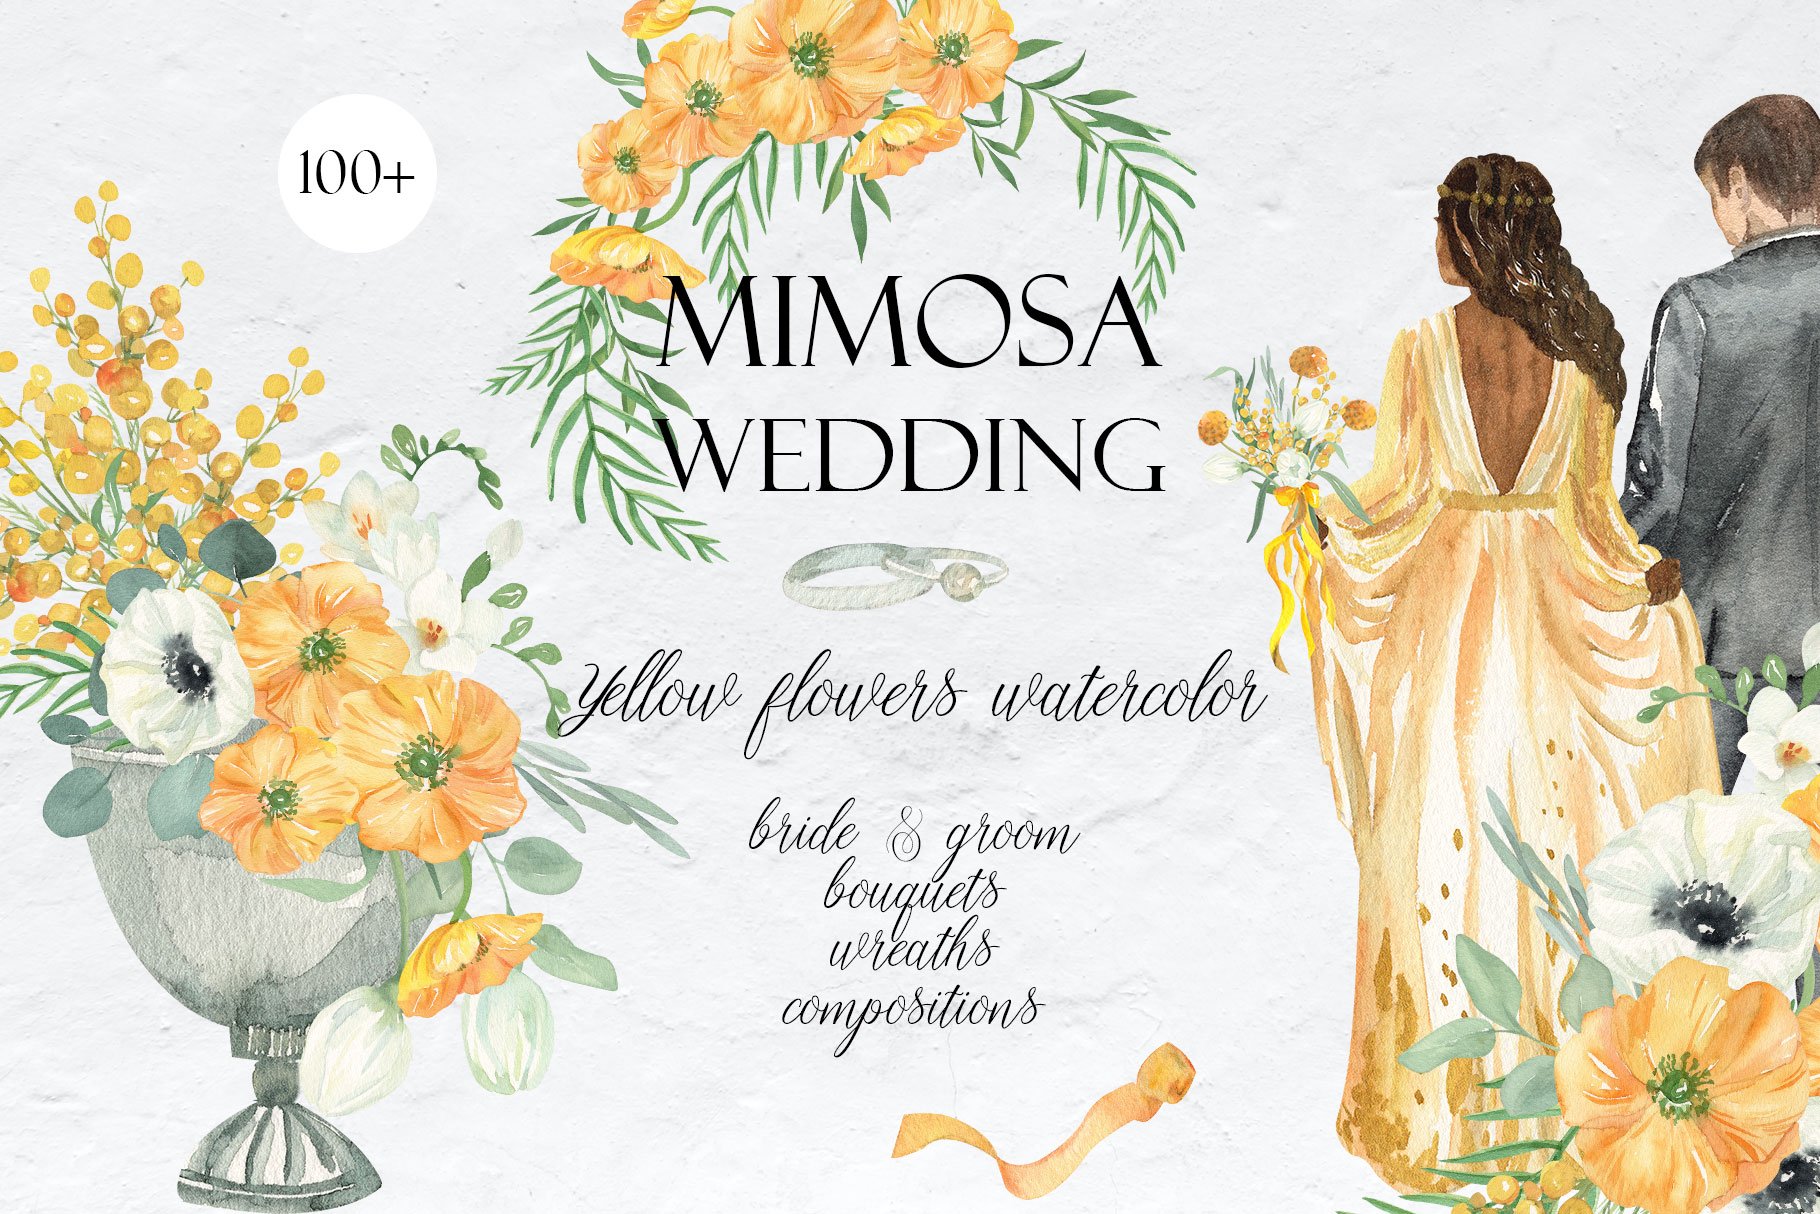 Mimosa Wedding - Yellow & Green Florals Watercolor